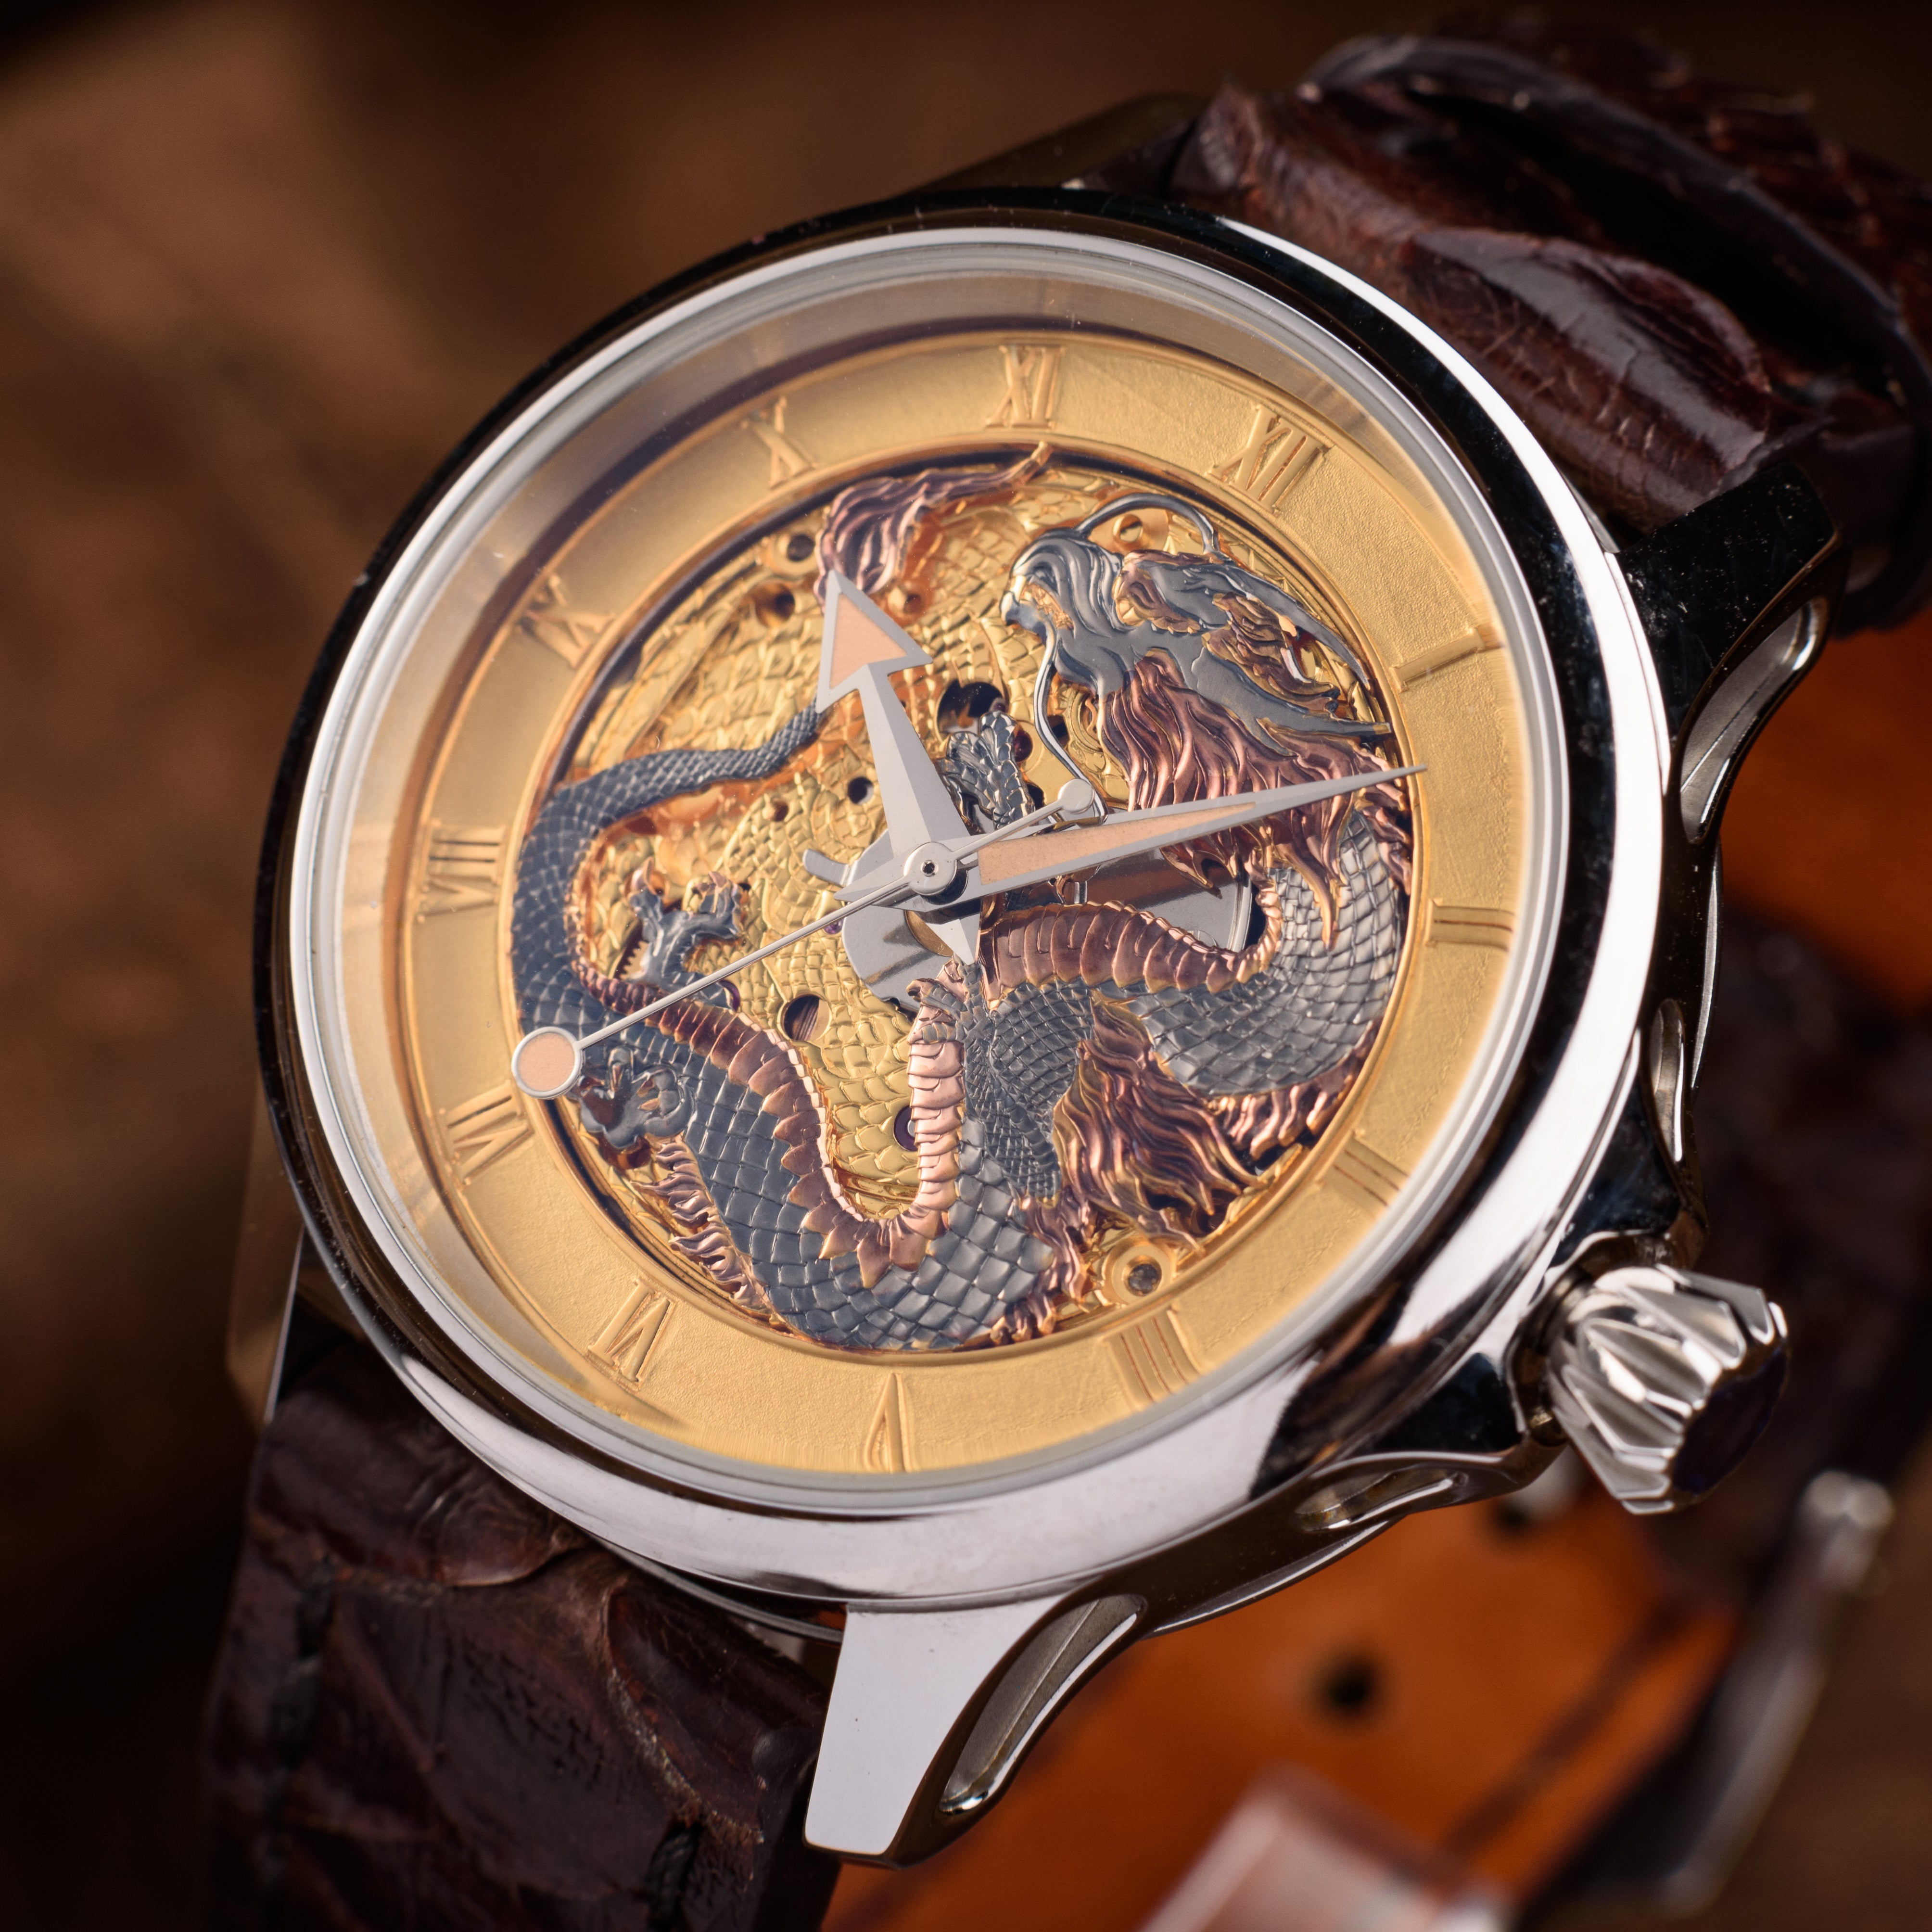 Mole custom watch, Model: Dragon V2, Movement: ETA 2824